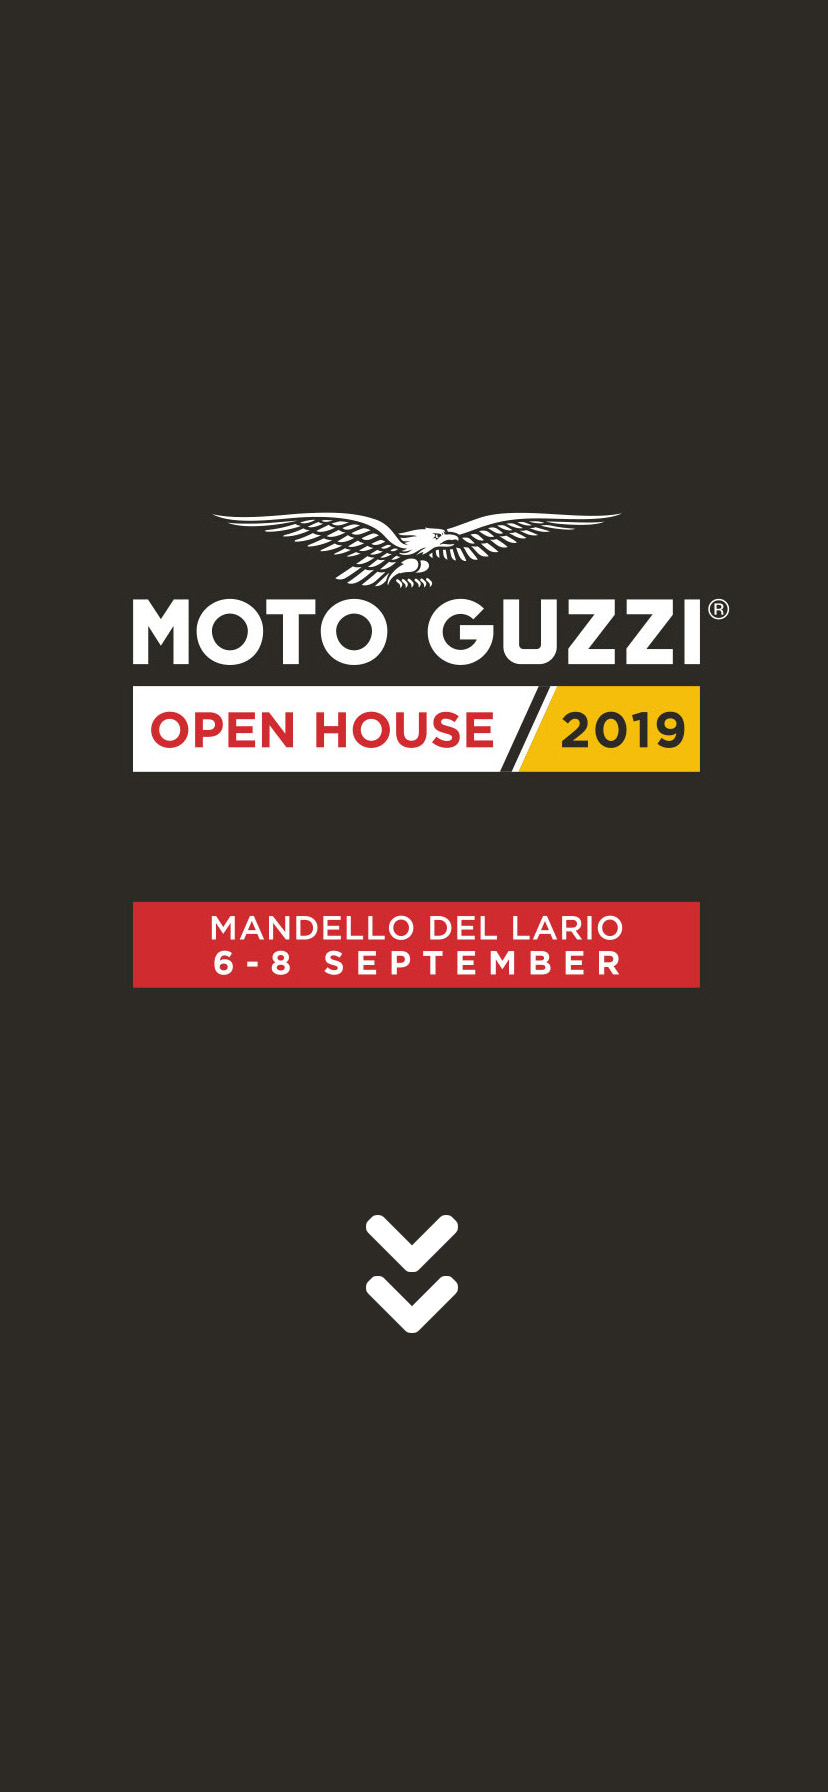 Open House Moto Guzzi